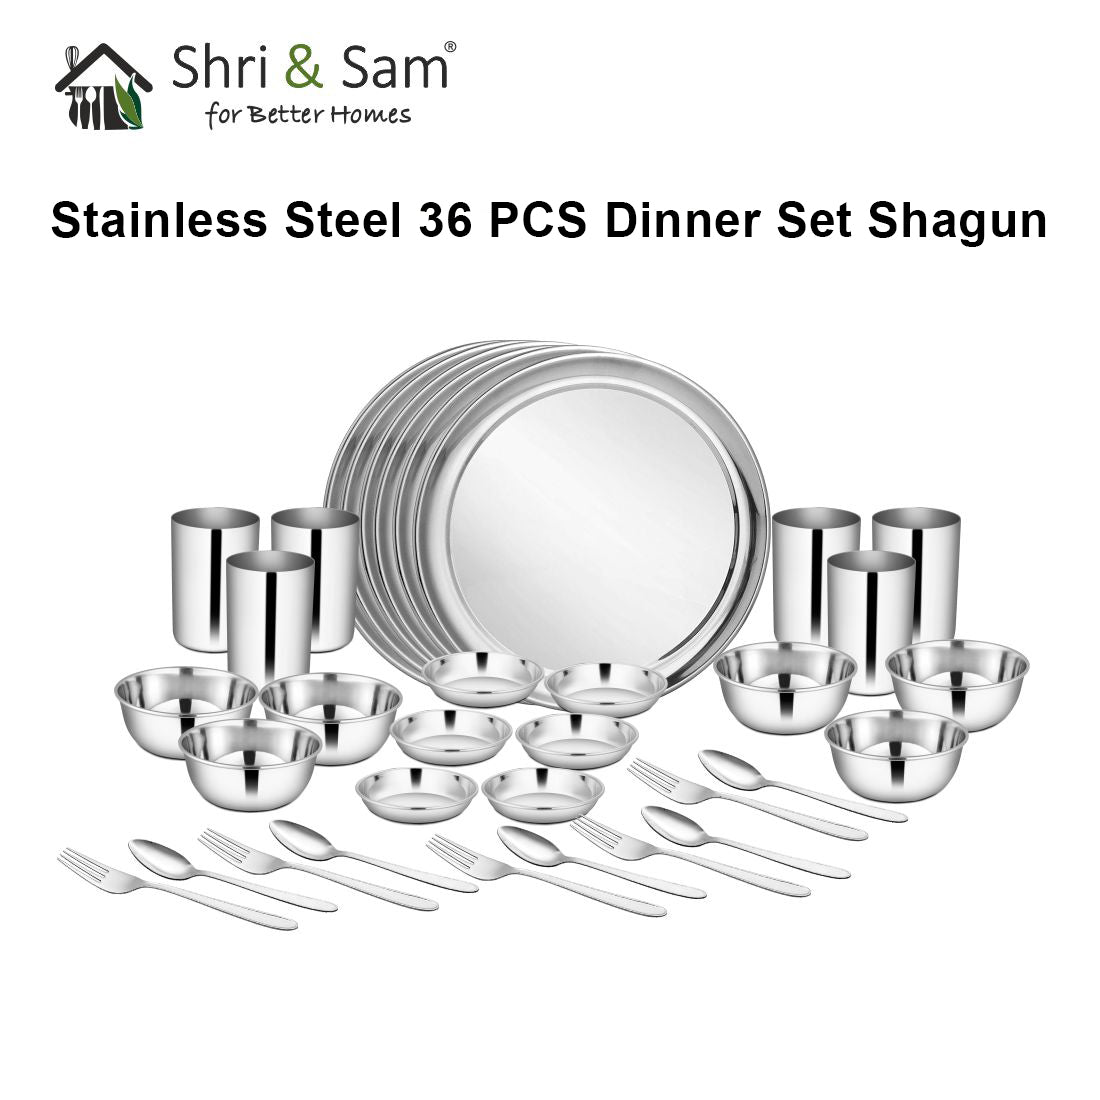 Stainless Steel 36 PCS Dinner Set (6 People) Shagun